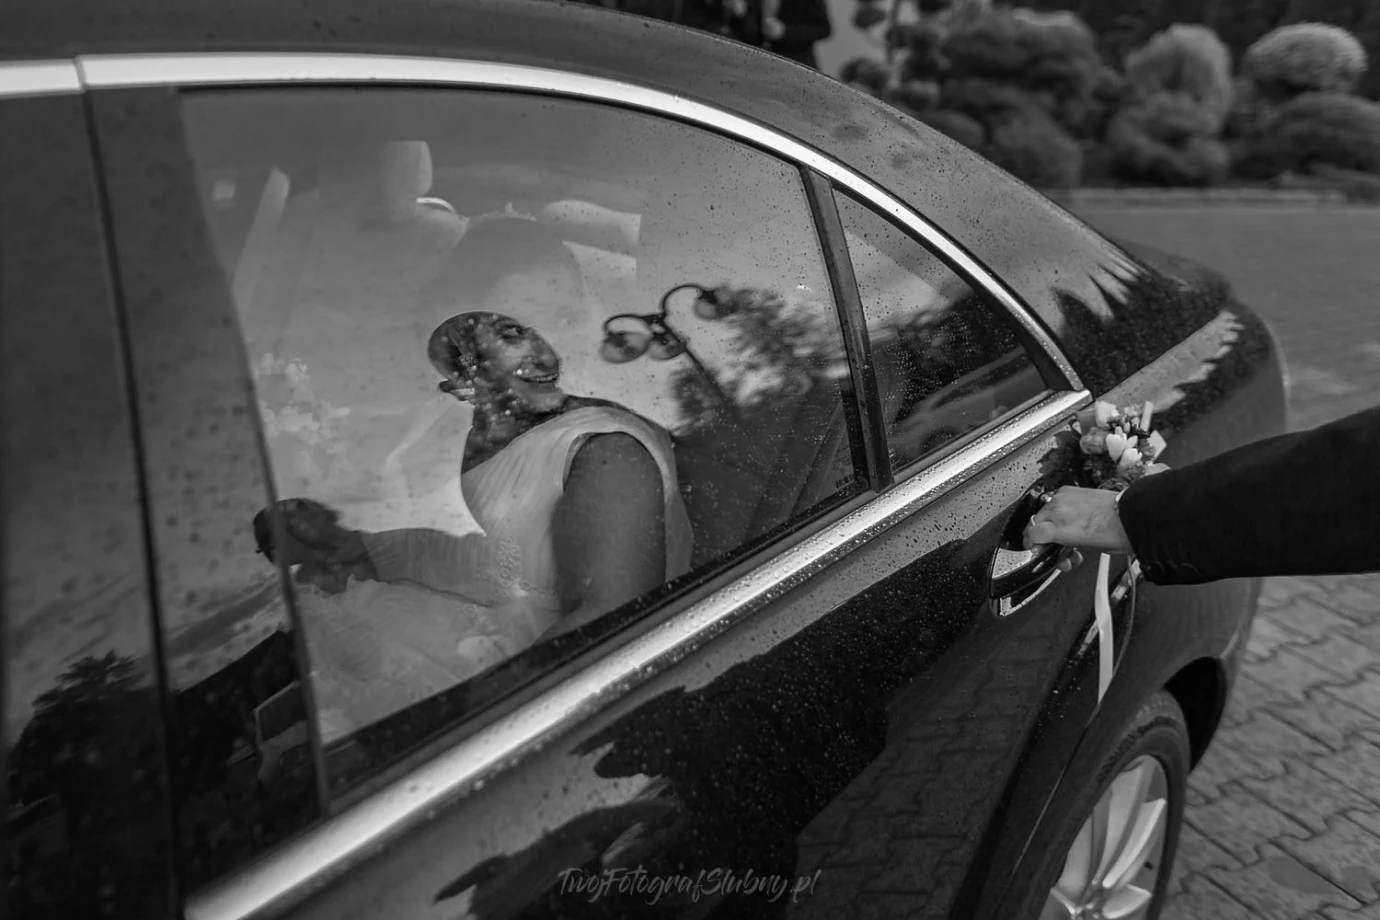 fotograf warszawa robert-wroblewski portfolio zdjecia slubne inspiracje wesele plener slubny sesja slubna